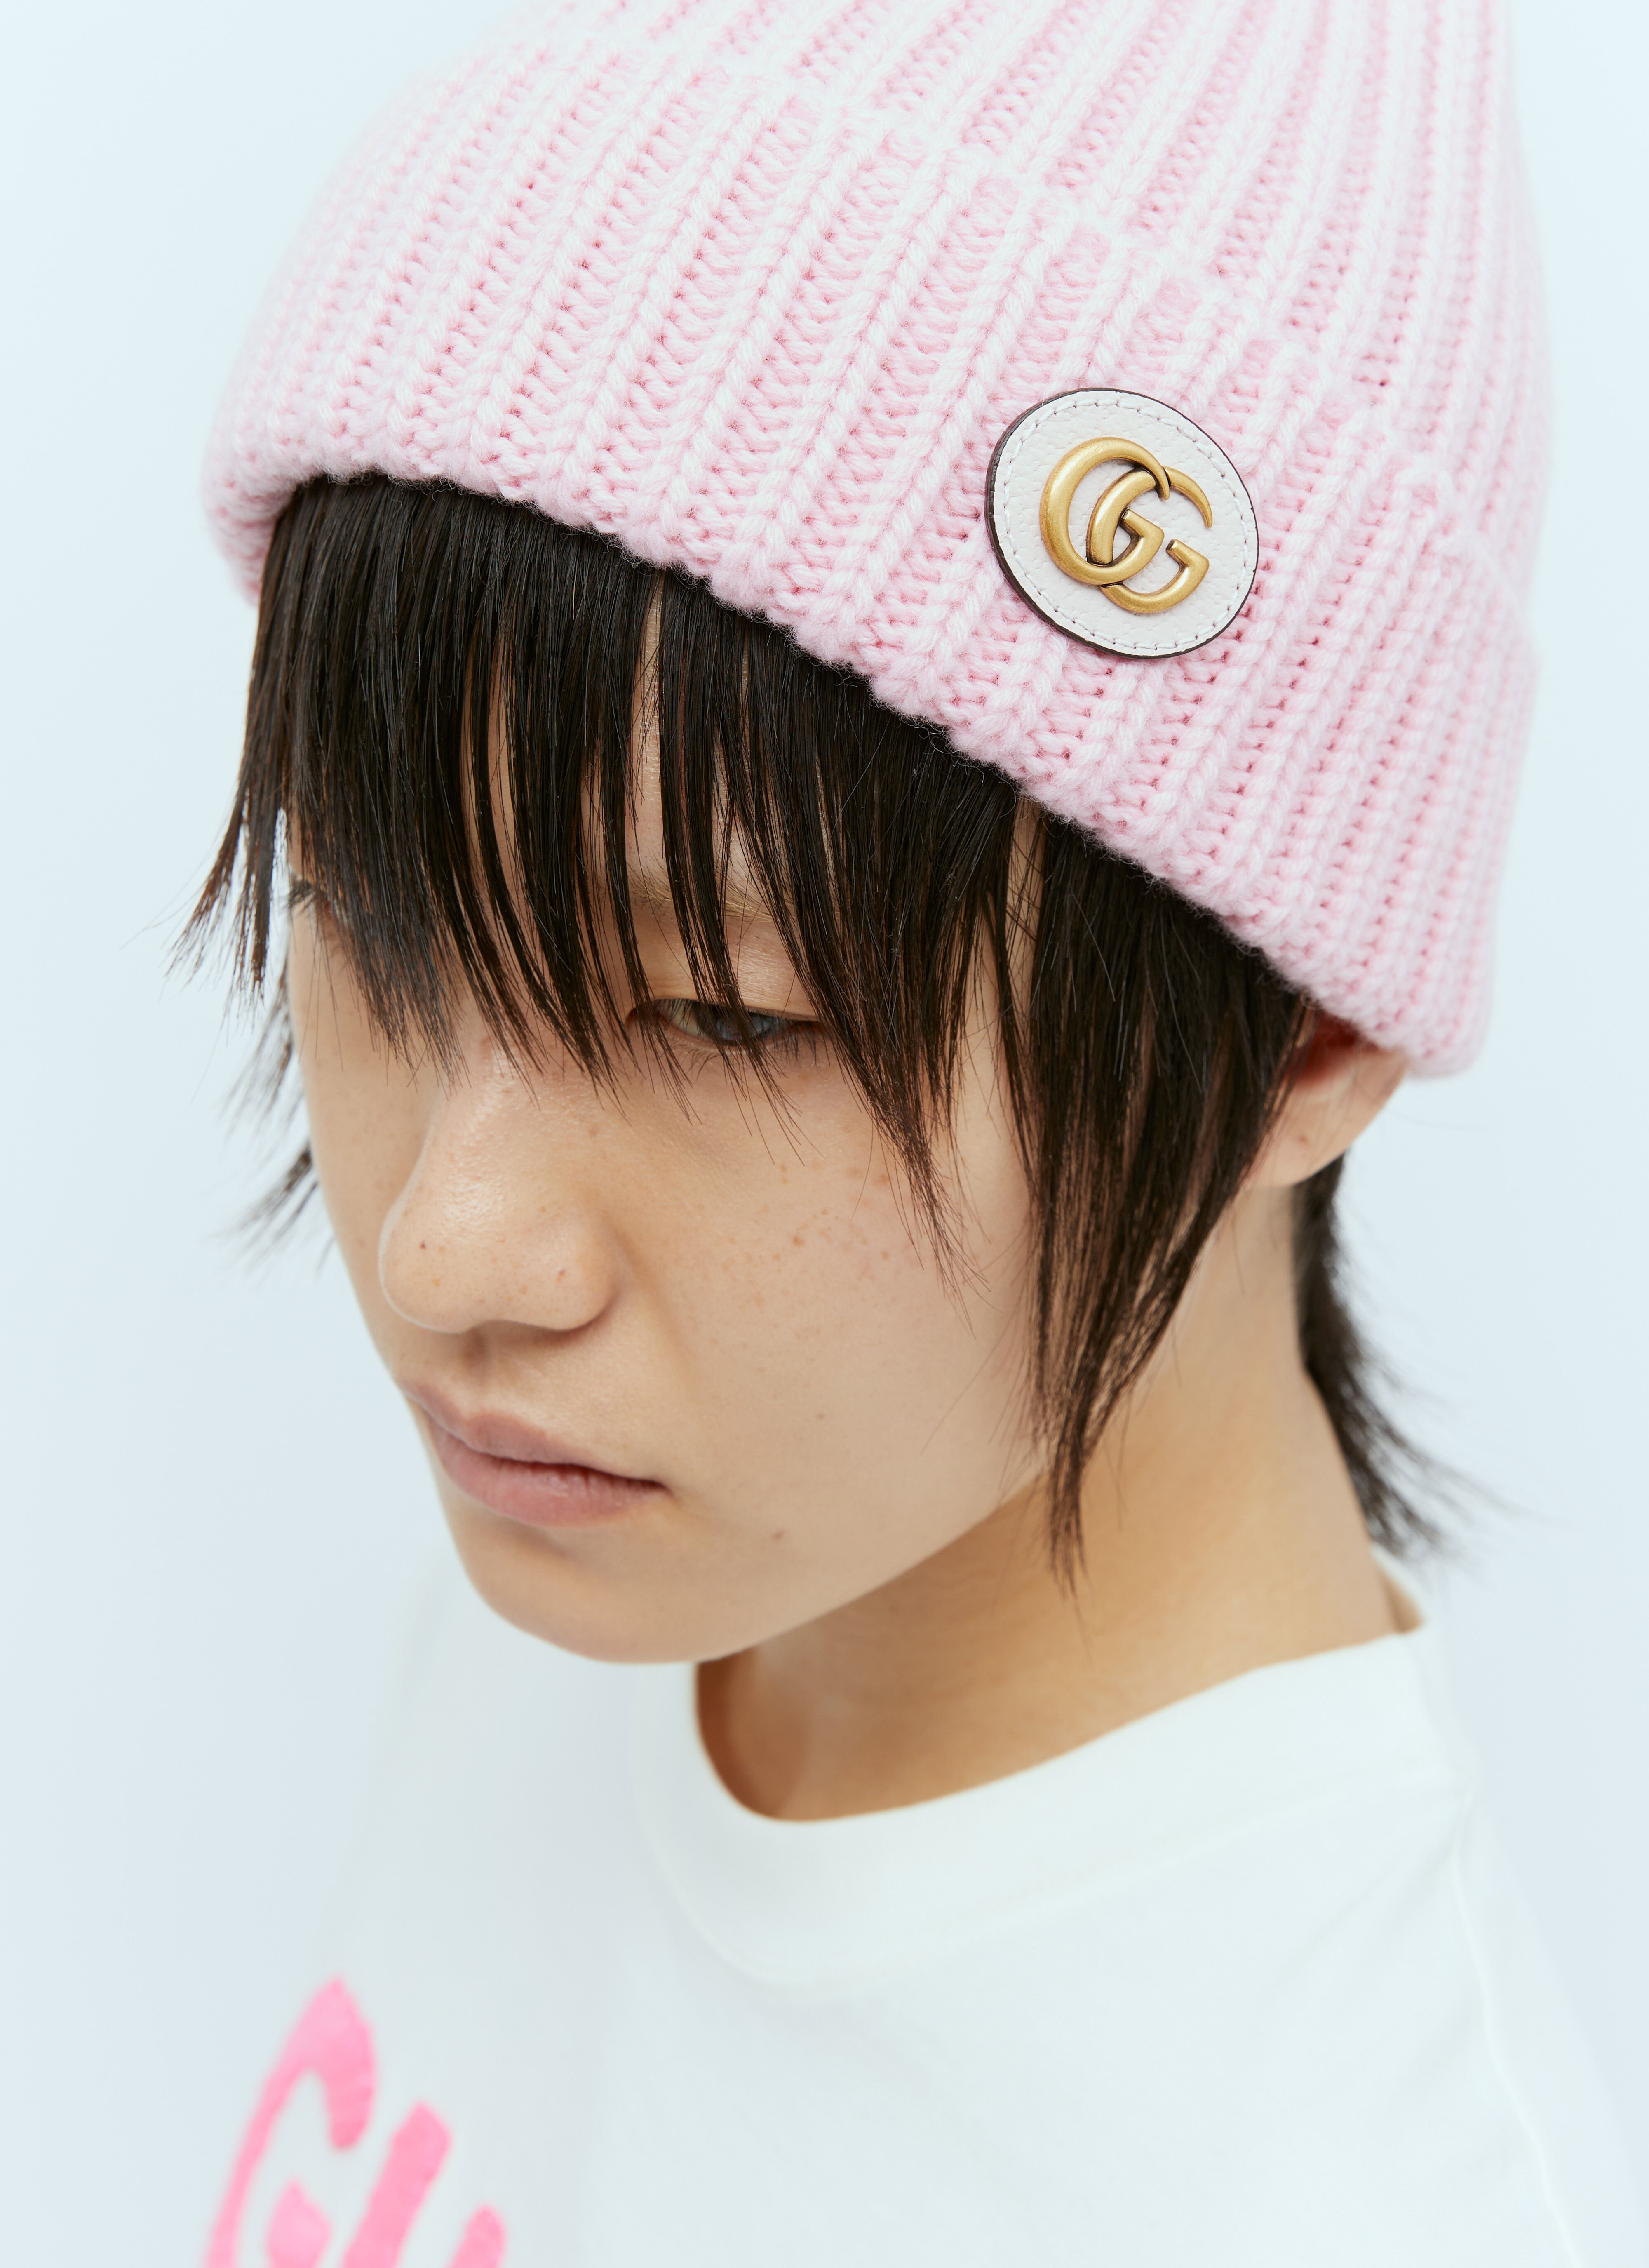 Gucci Wool Cashmere Beanie Hat Pink guc0255179